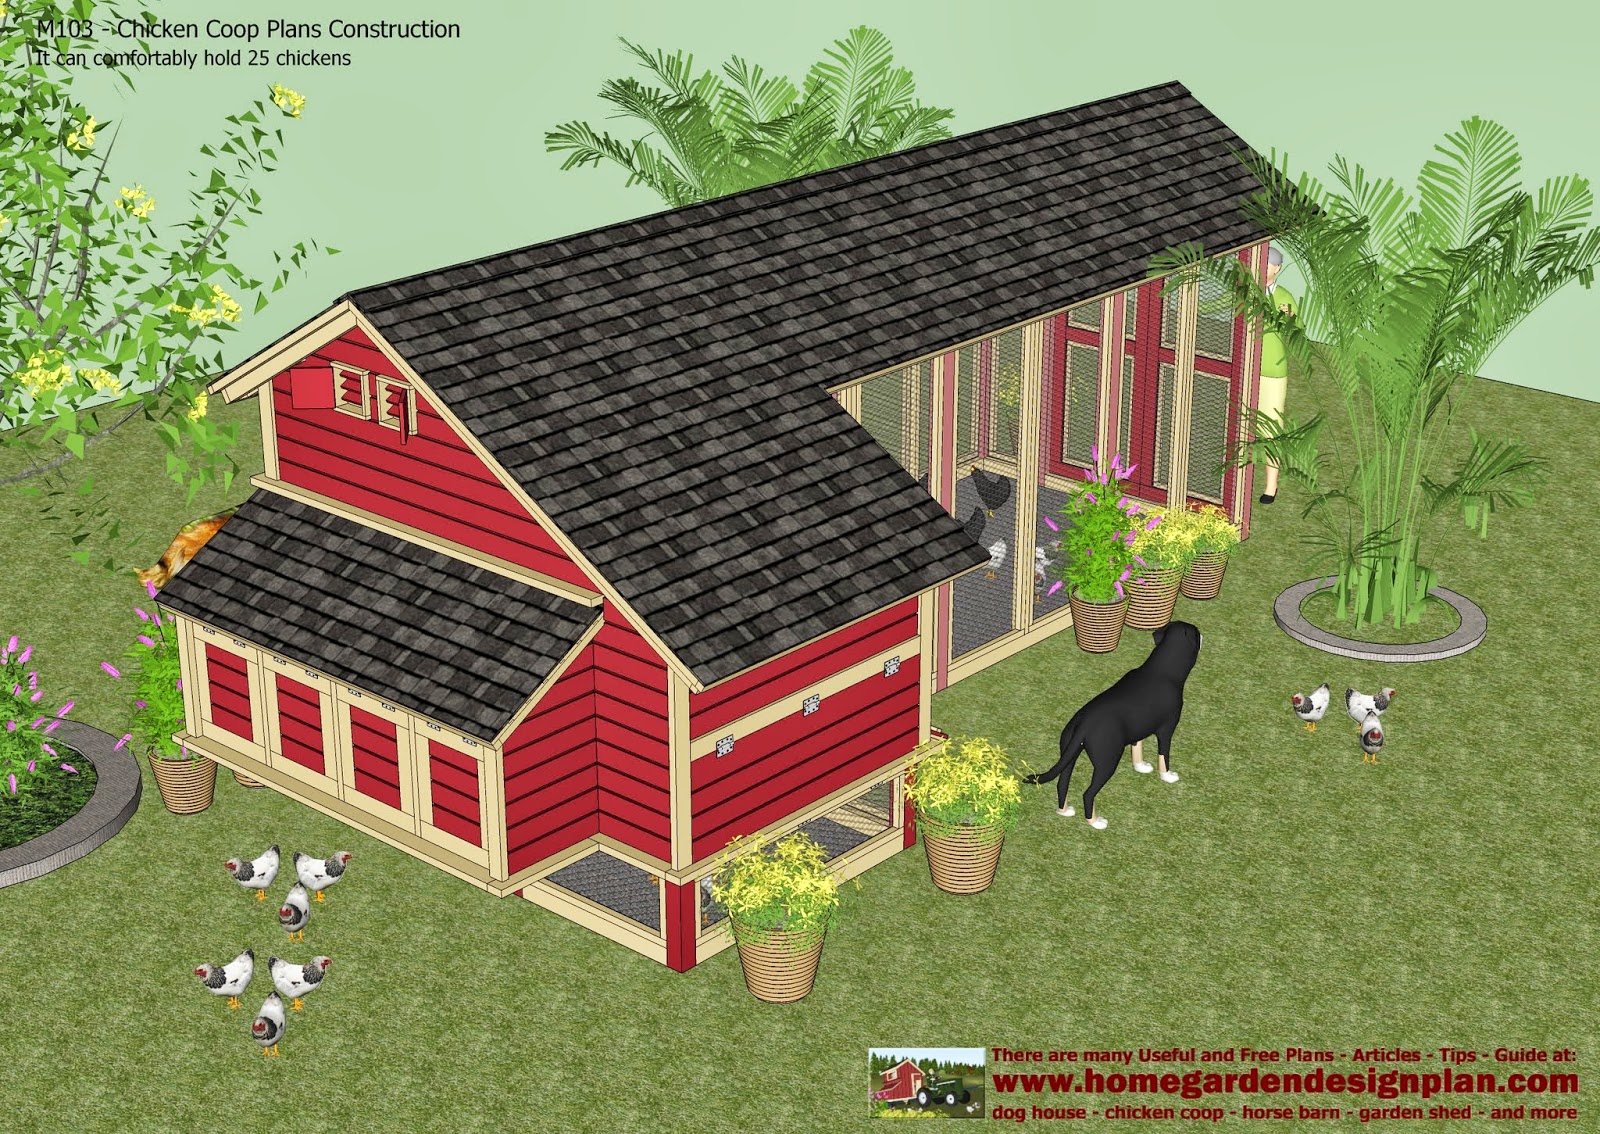 home garden plans M103 - Chicken Coop Plans Construction 